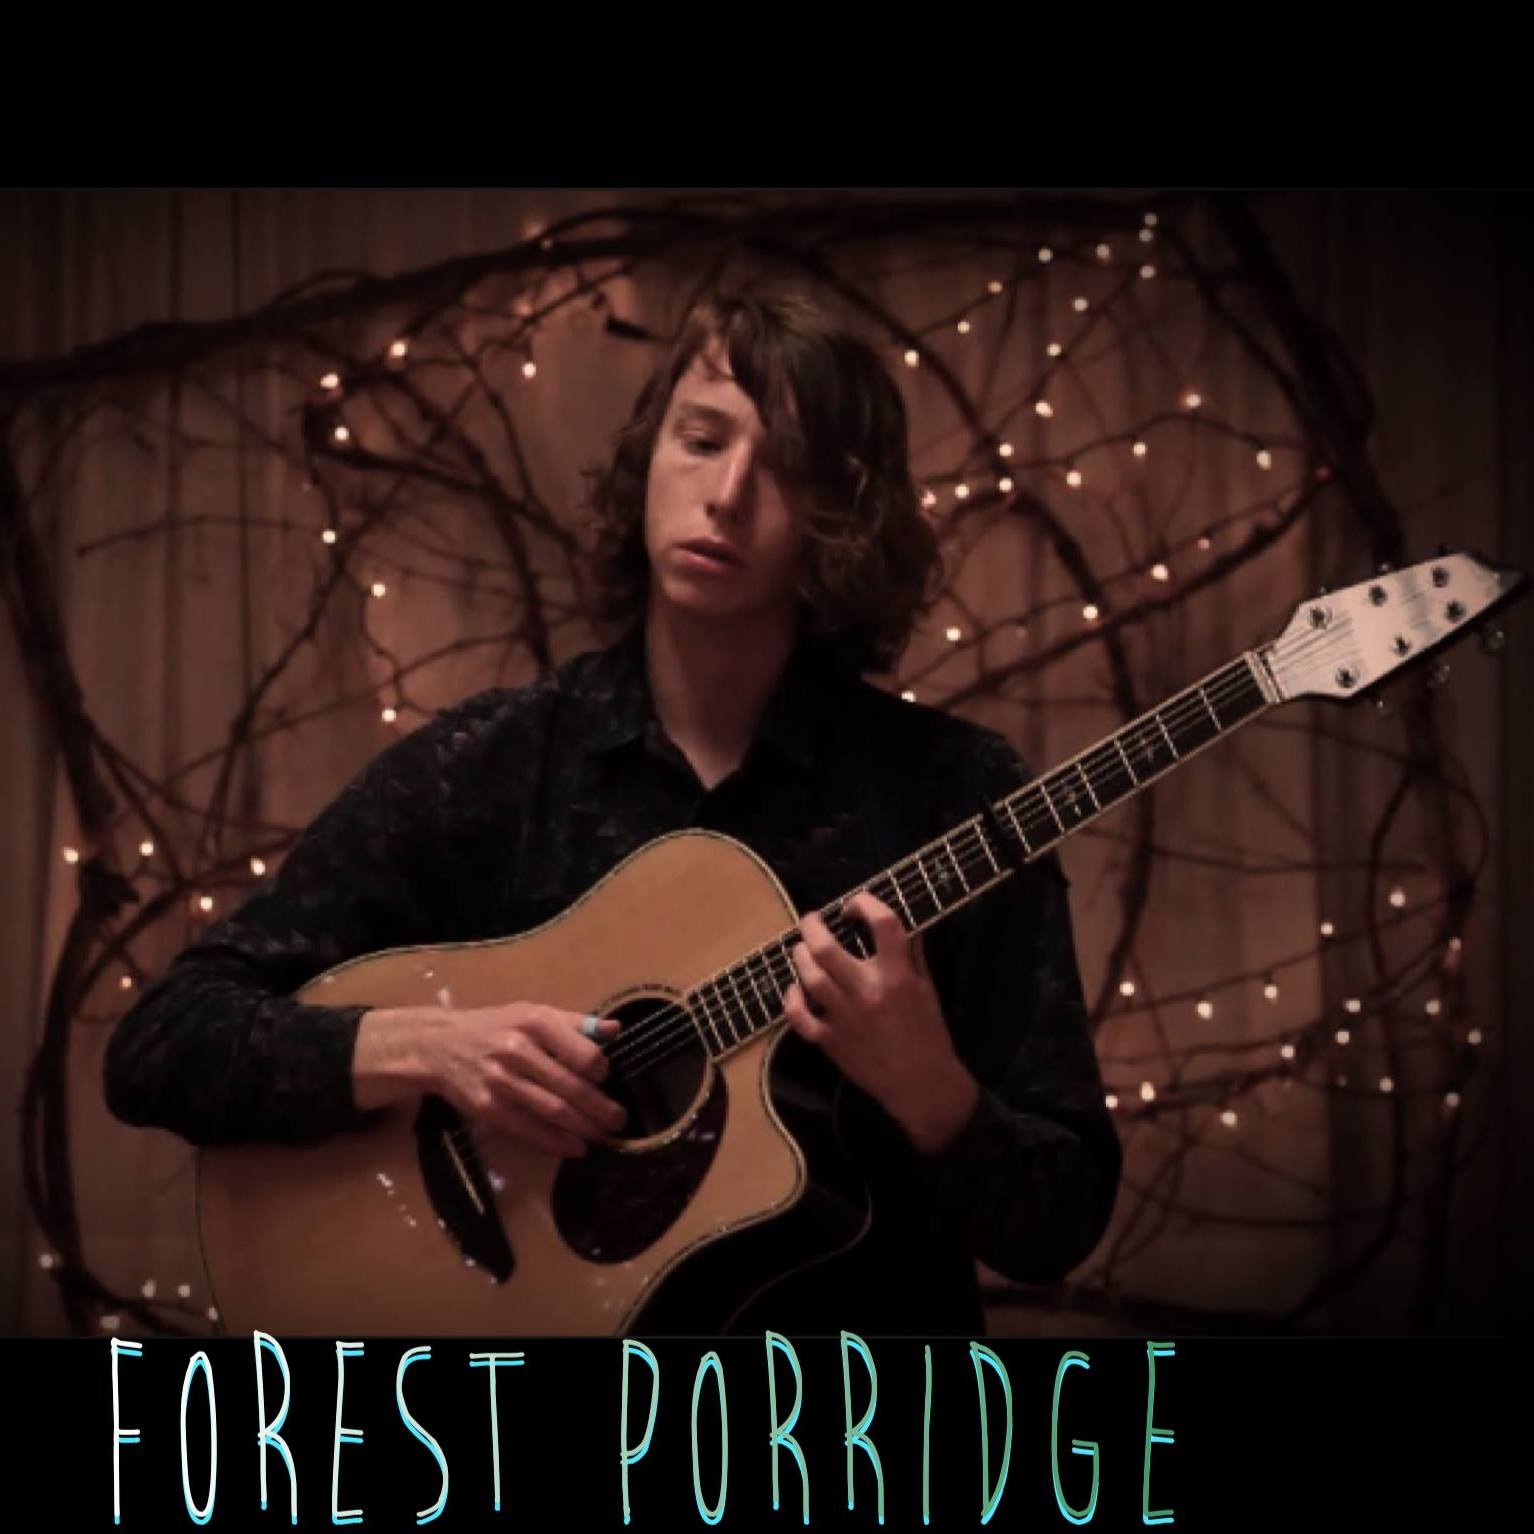 http://indiemusicpeople.com/Uploads/Forest_Porridge_-_fp.jpg